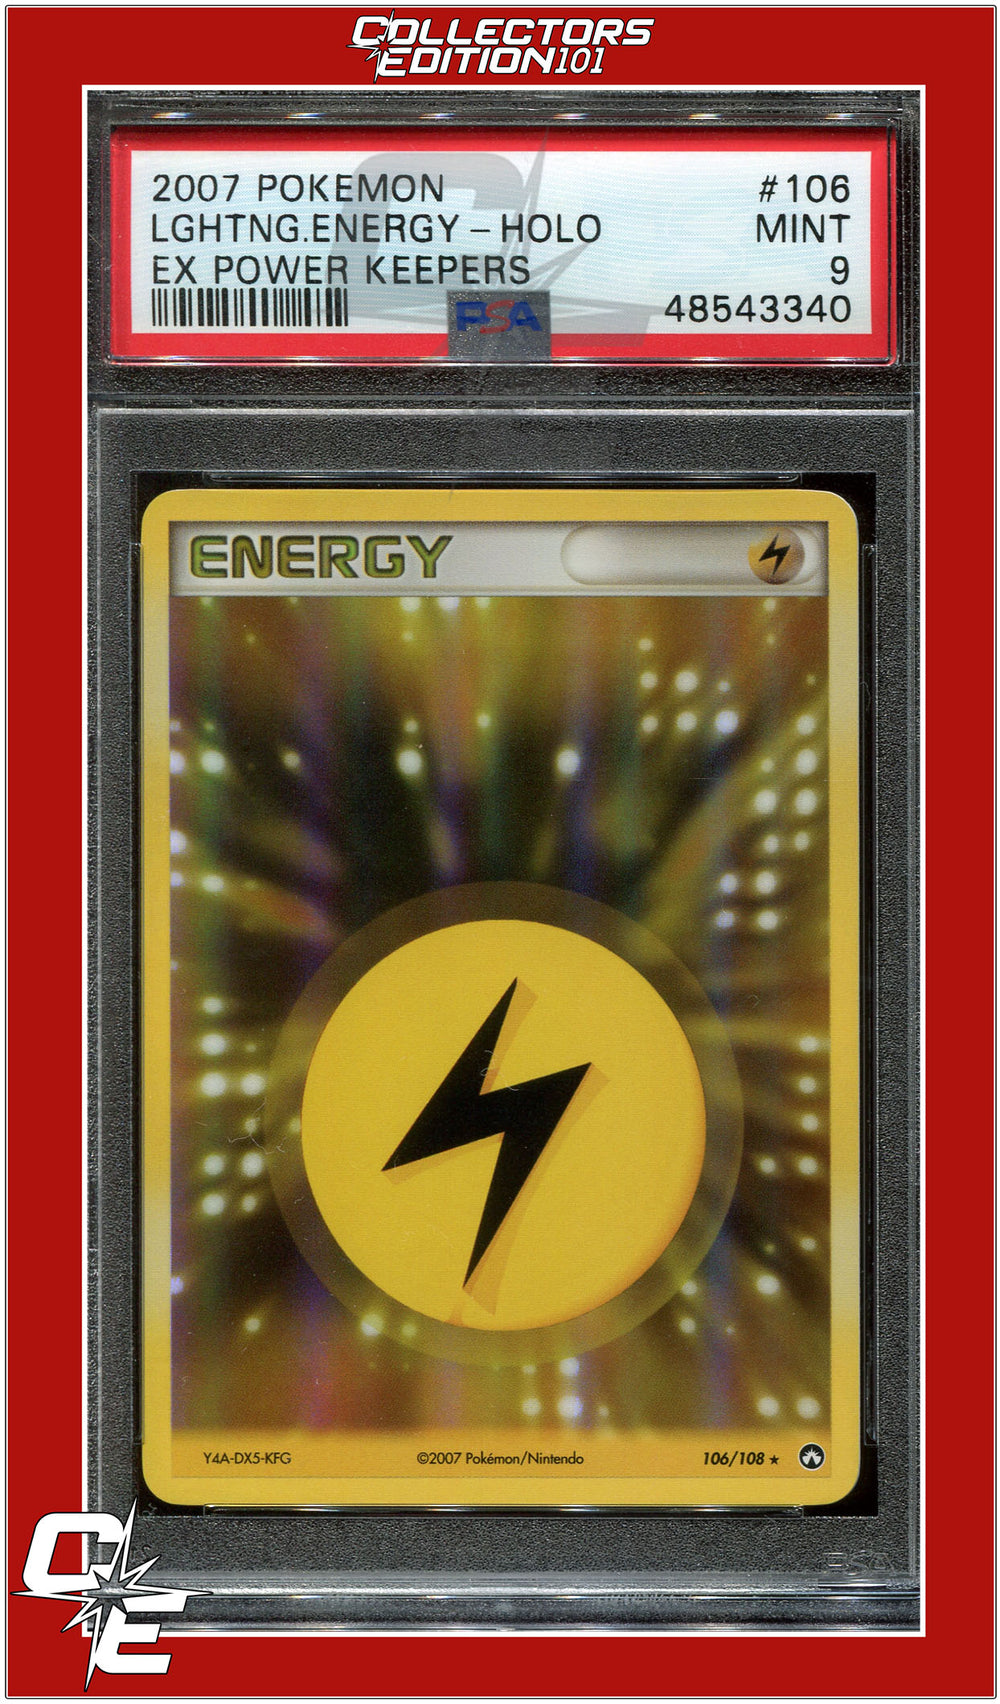 EX Power Keepers 106 Lightning Energy Holo PSA 9